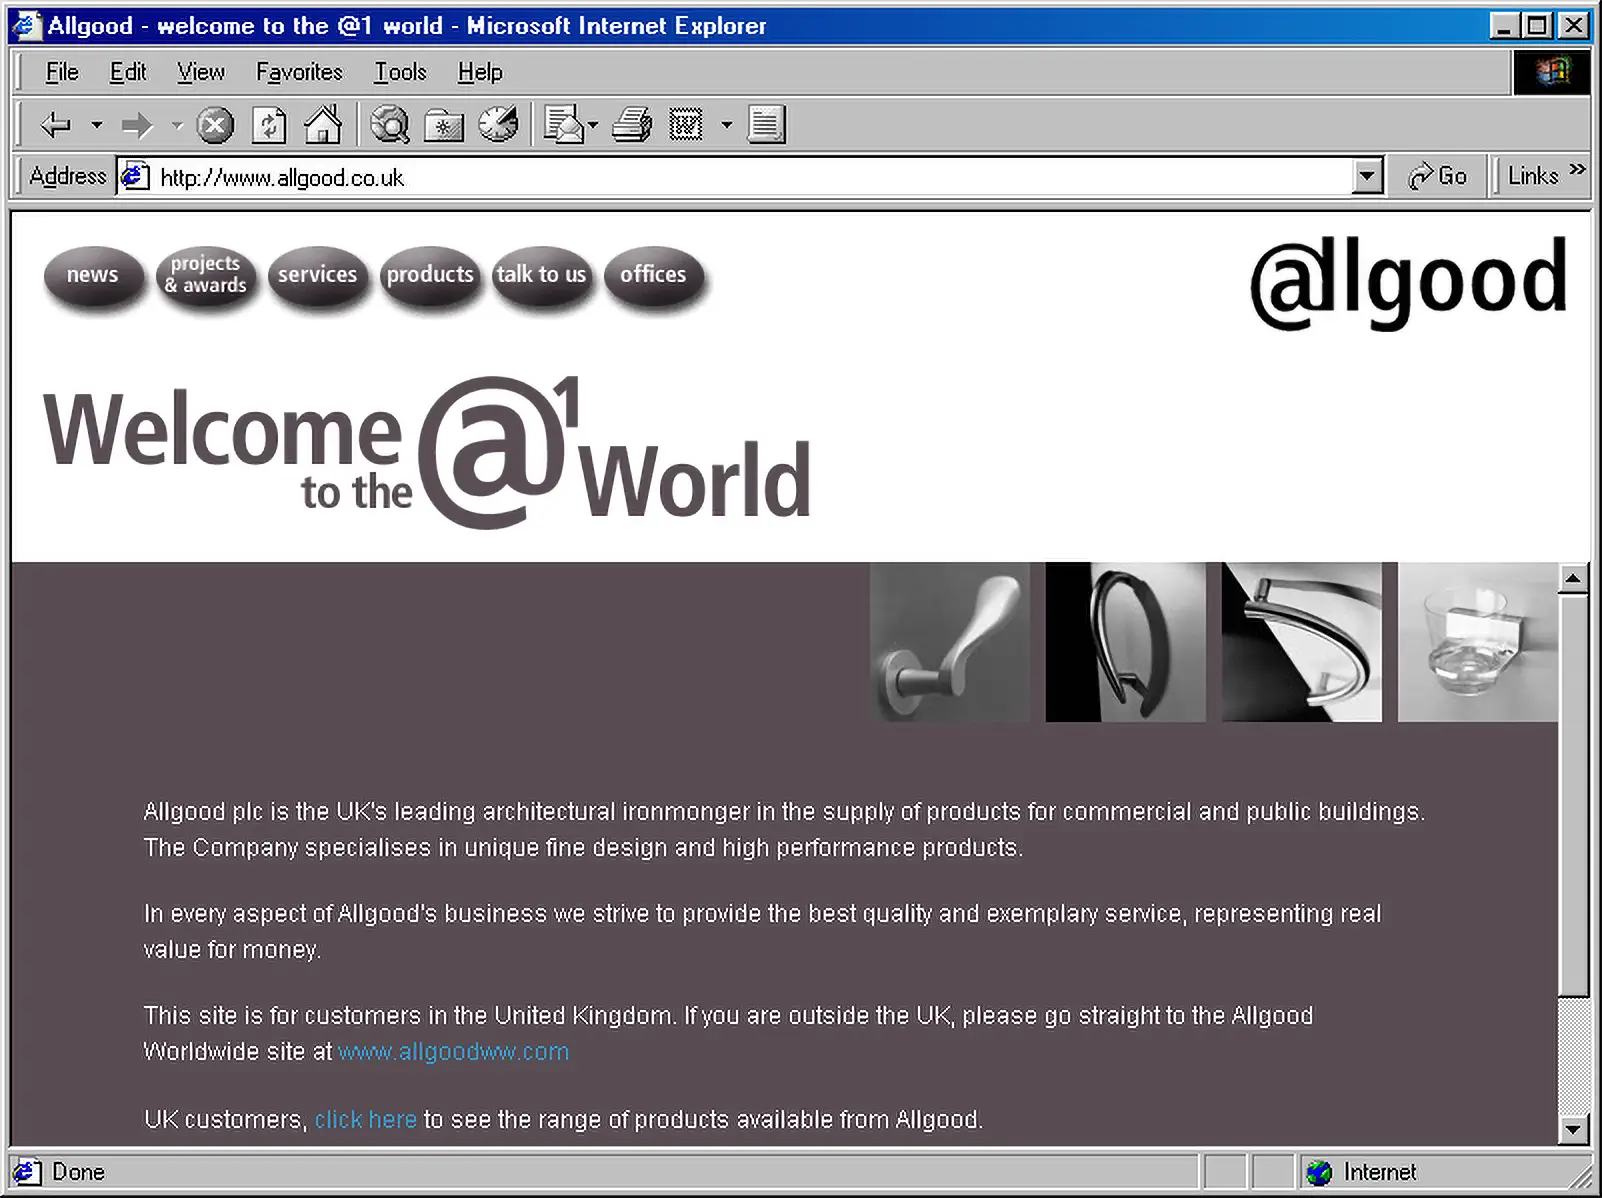 Allgood website in an IE3 browser window